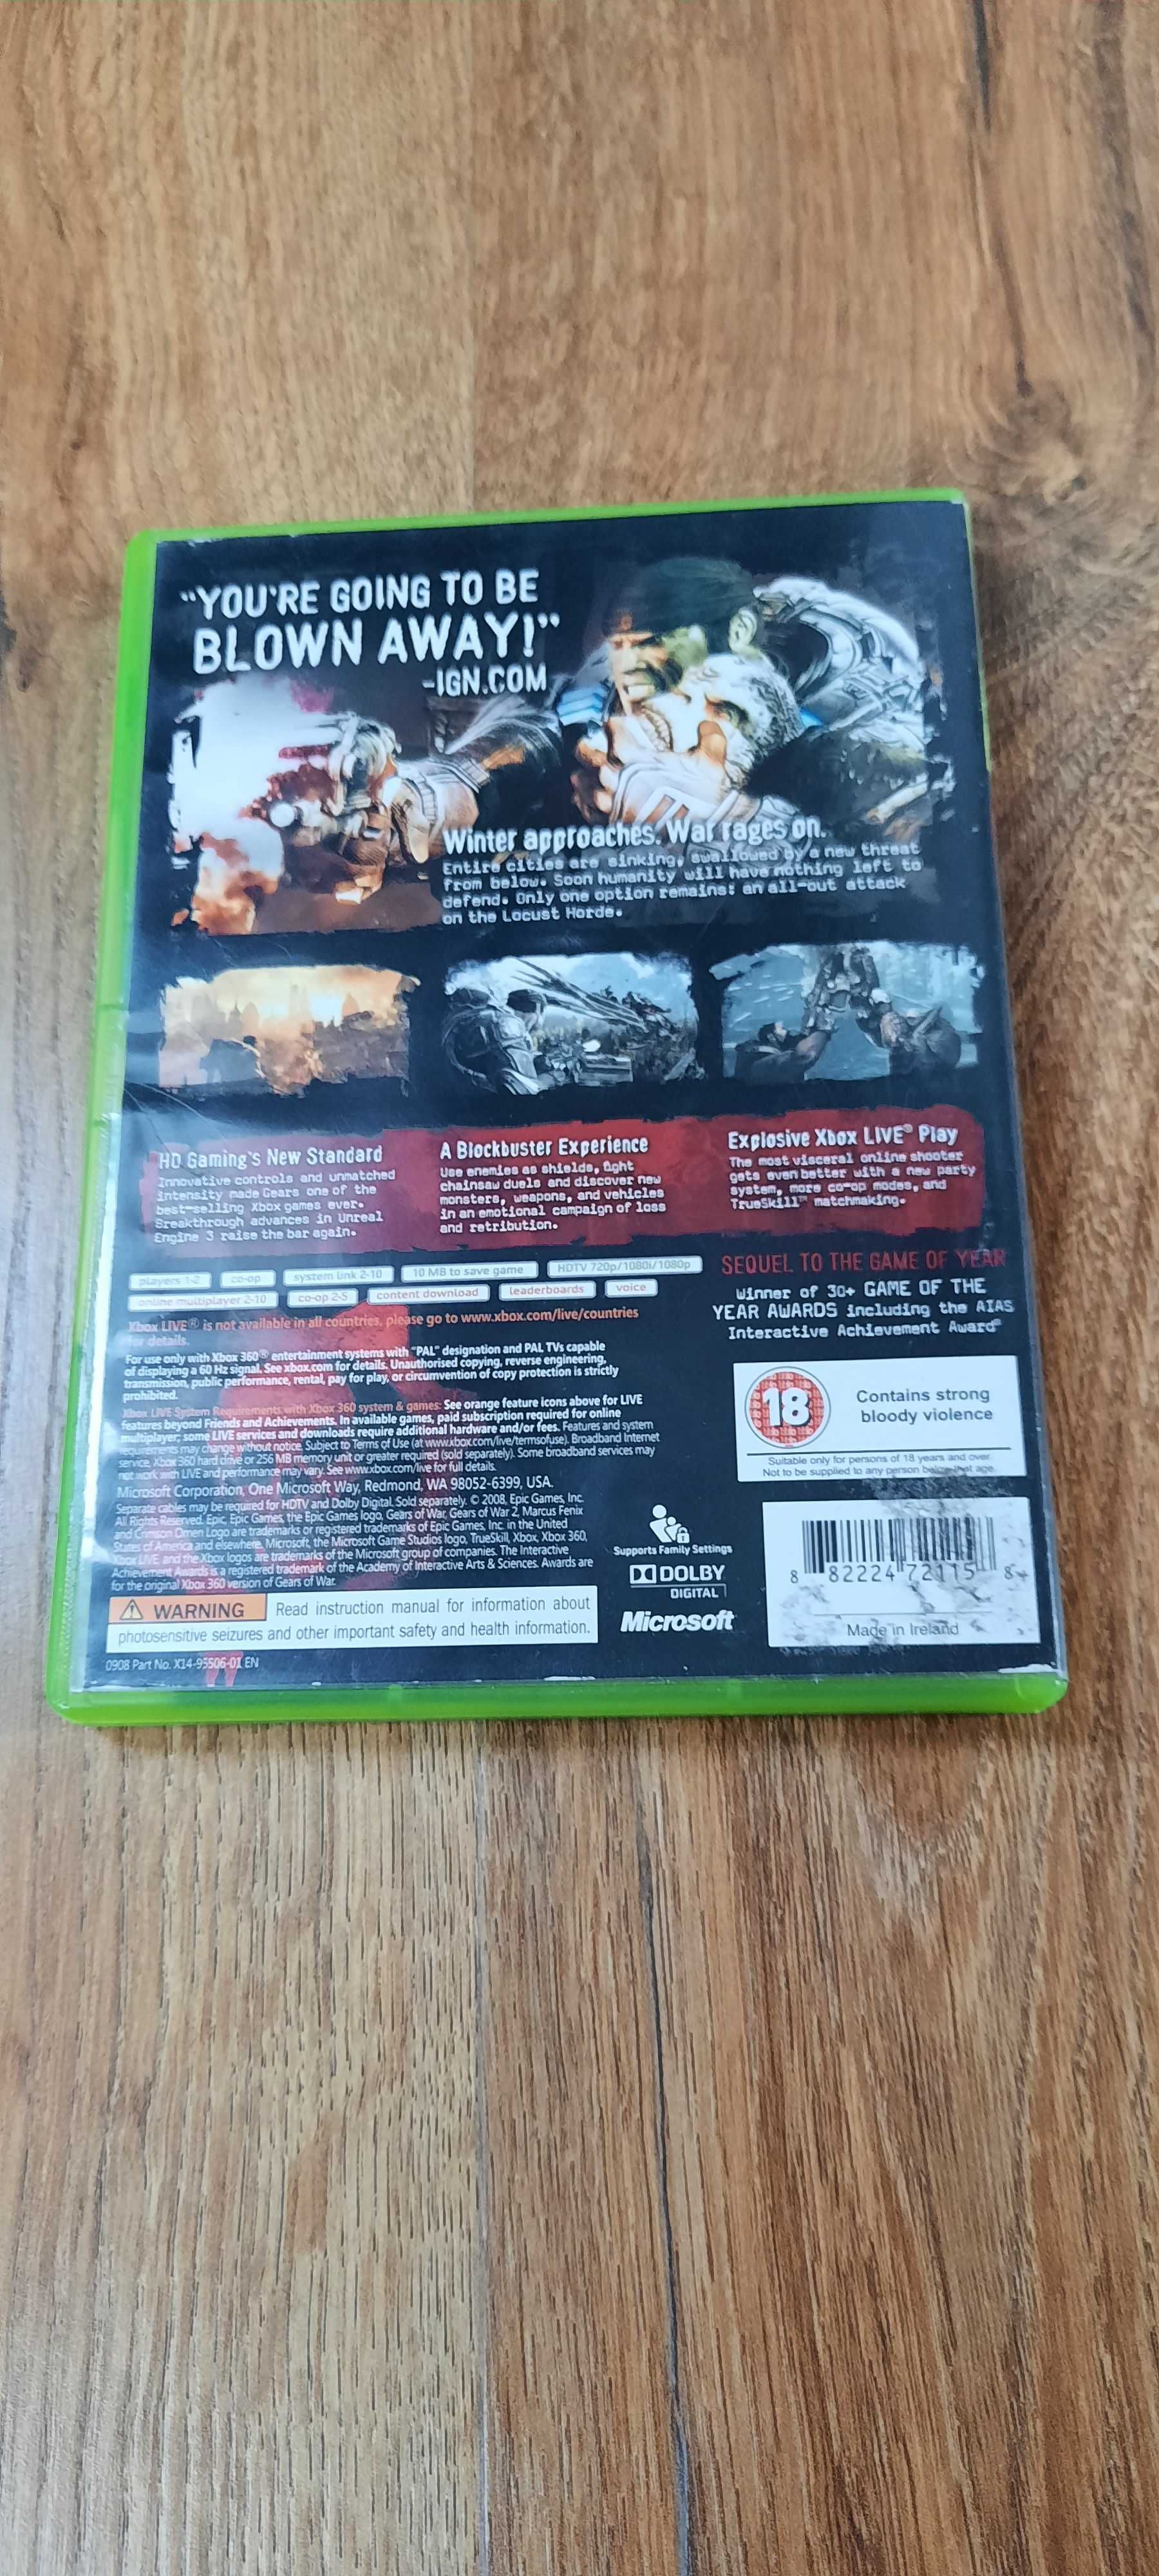 Gra Xbox 360 Gears of War 2